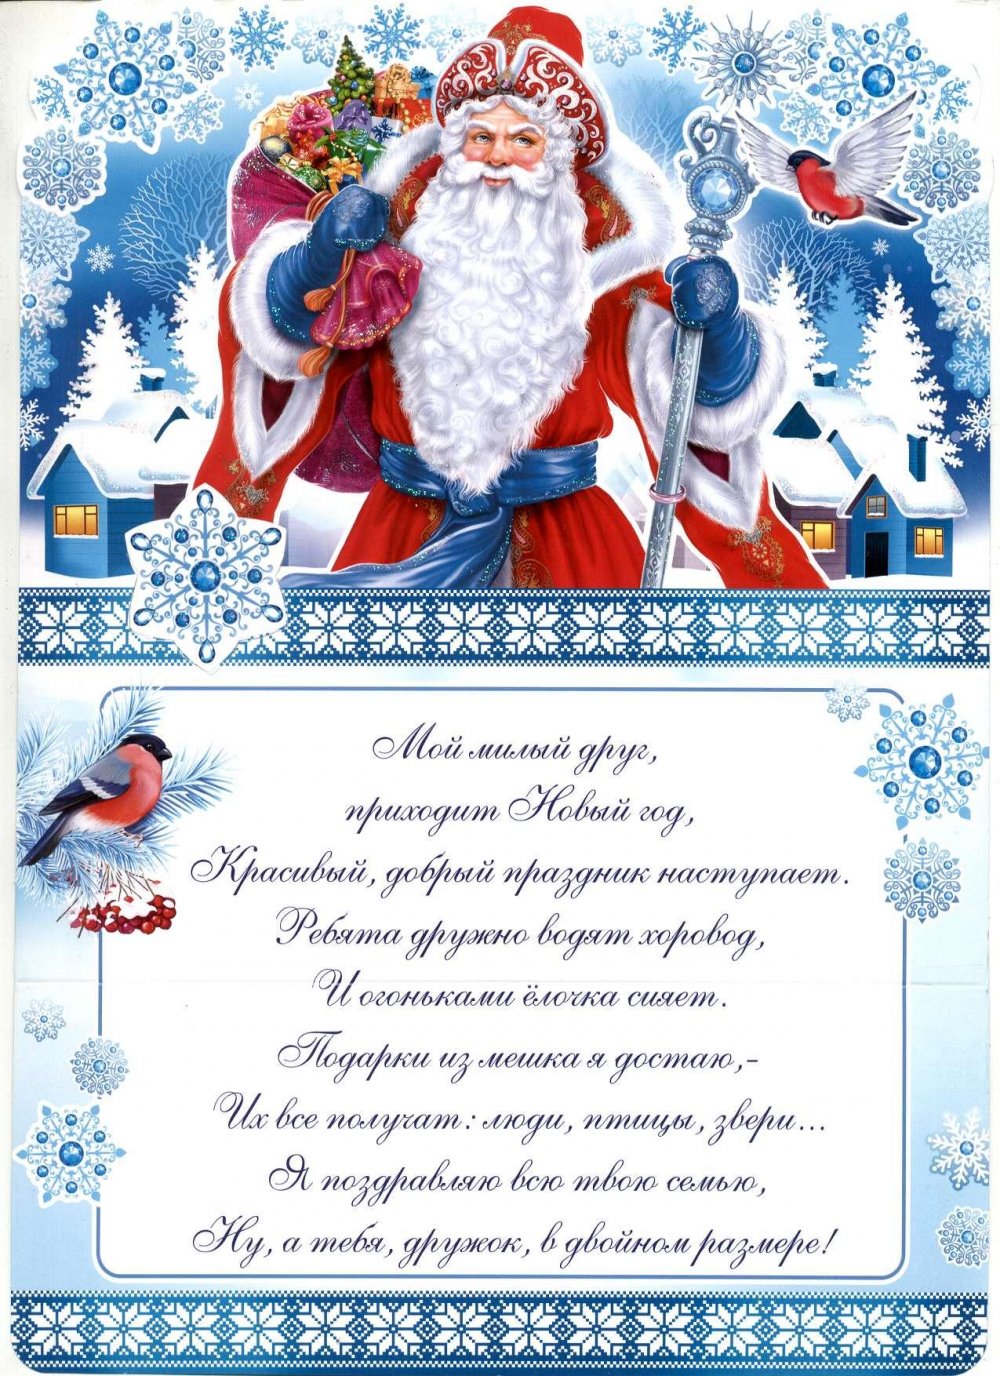 Новогодняя телеграмма от Деда Мороза